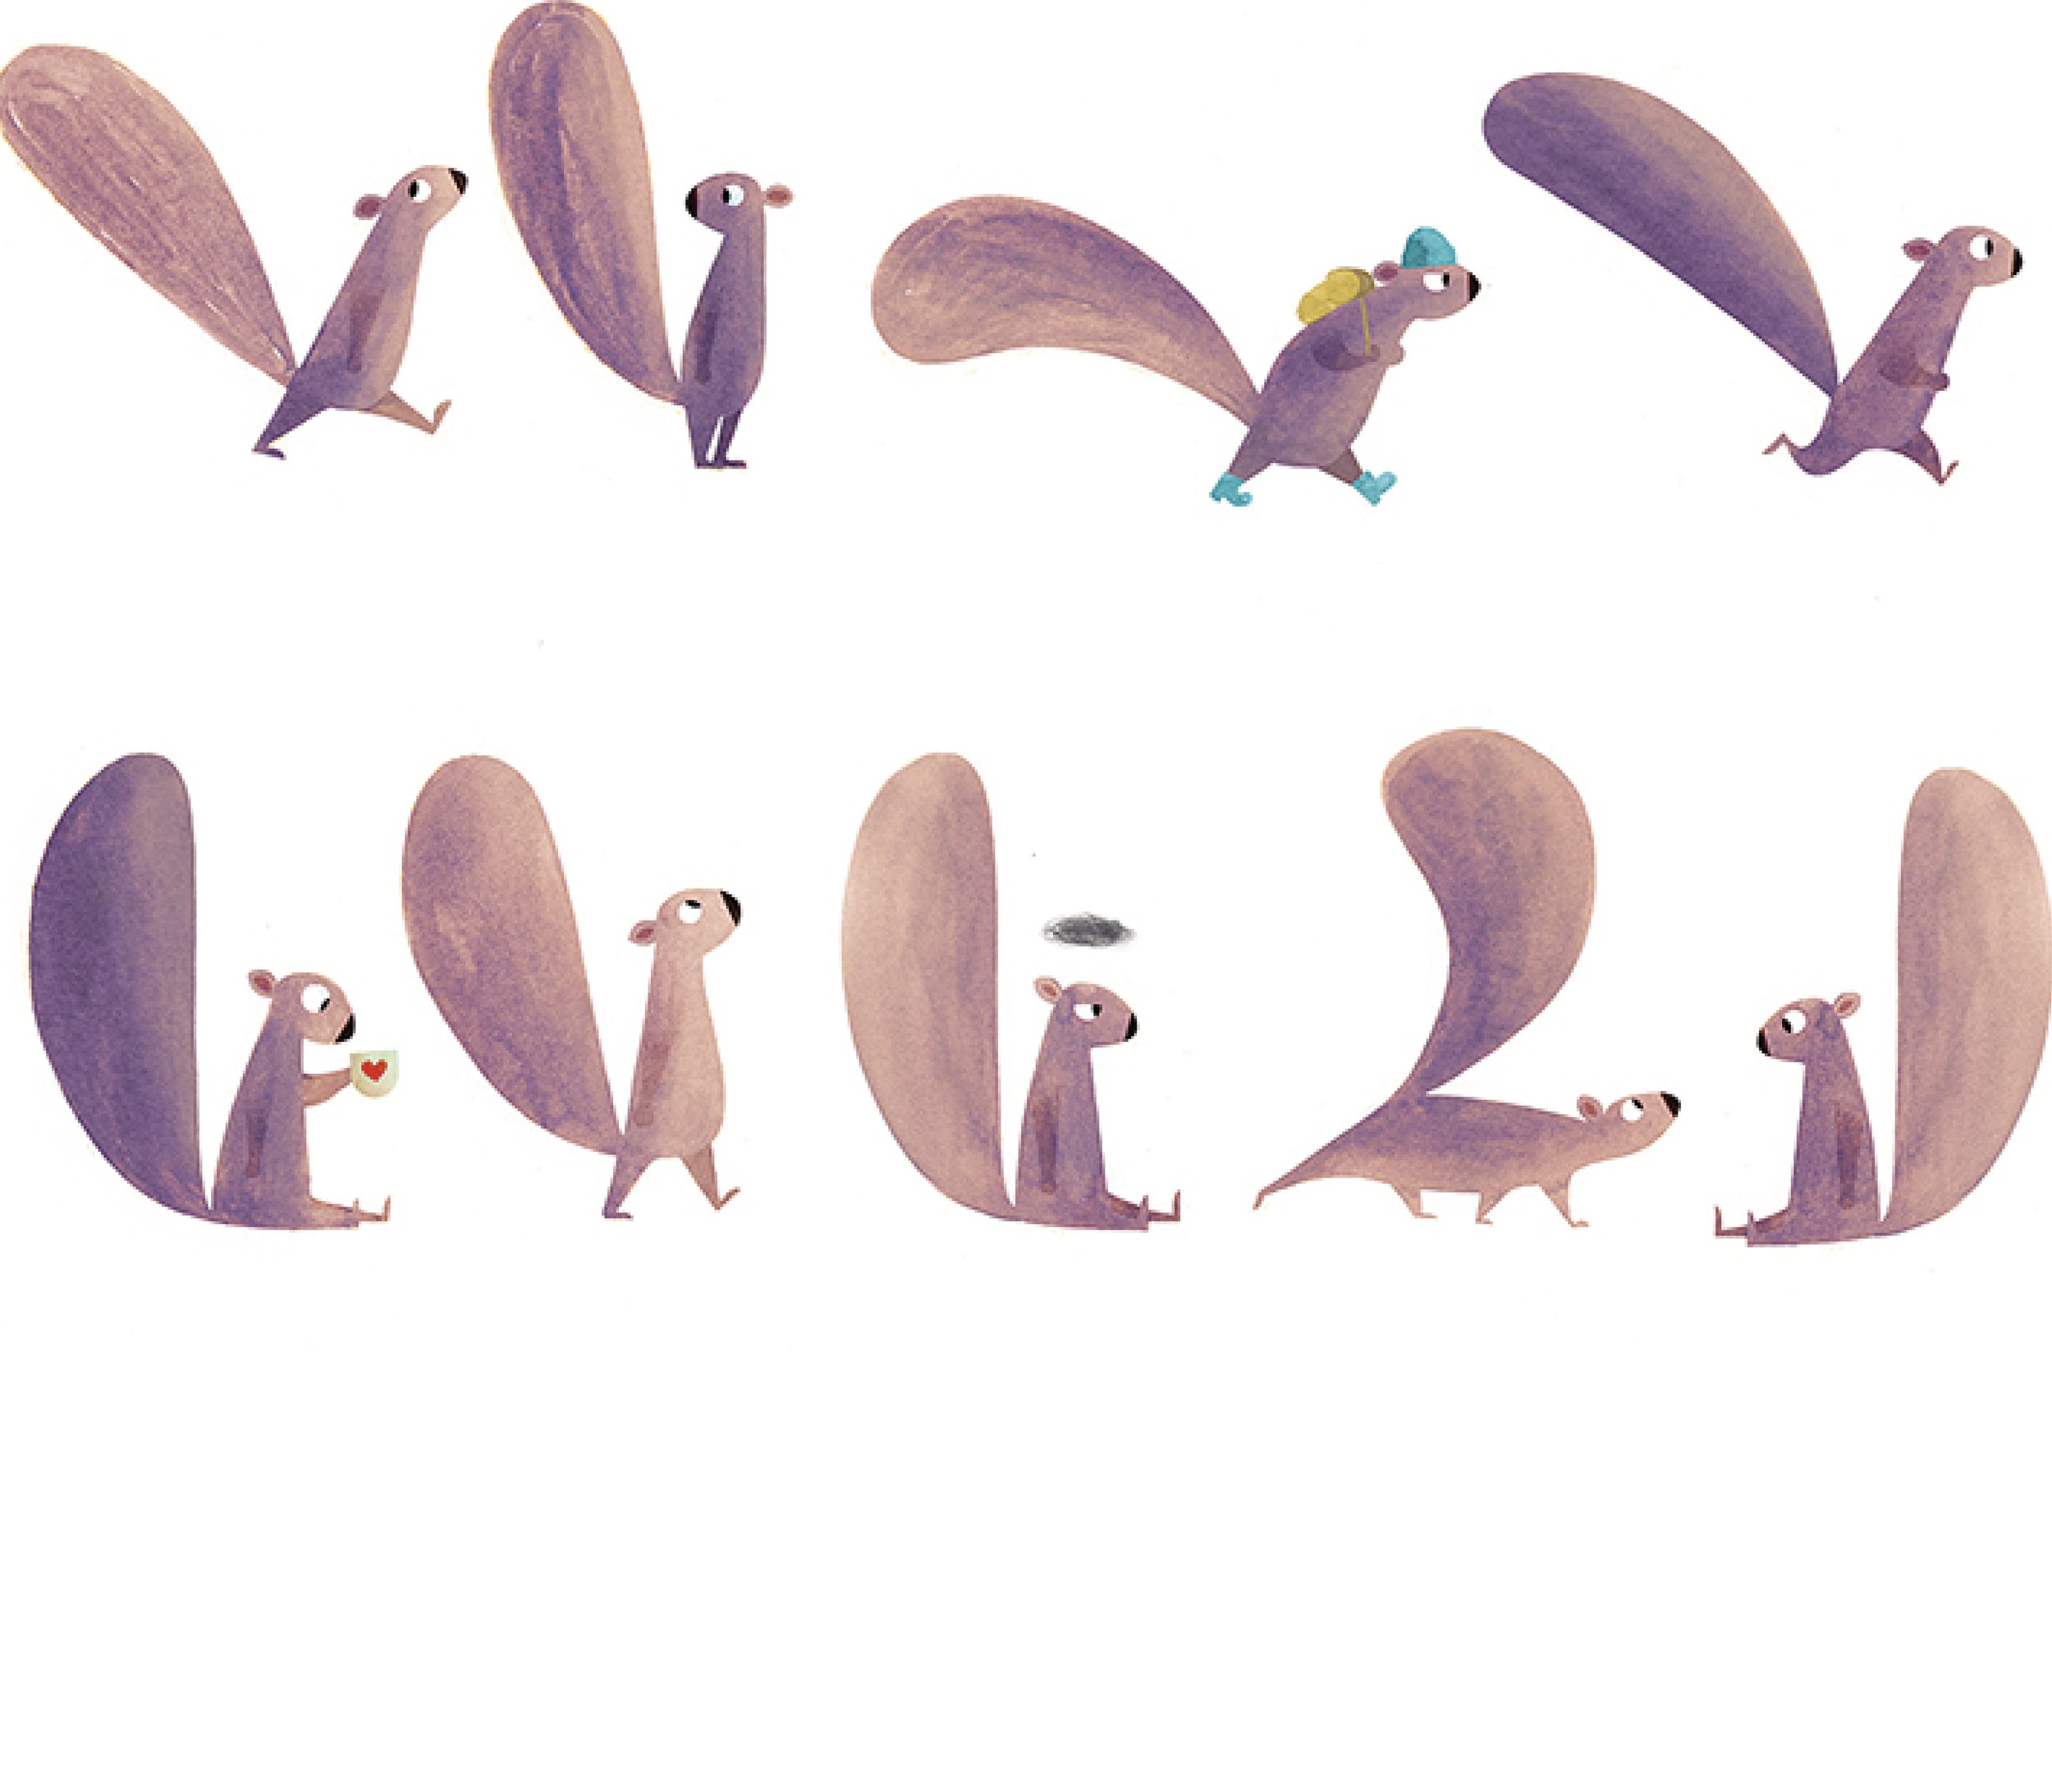 steve-small-squirrel-poses-illustration.jpg